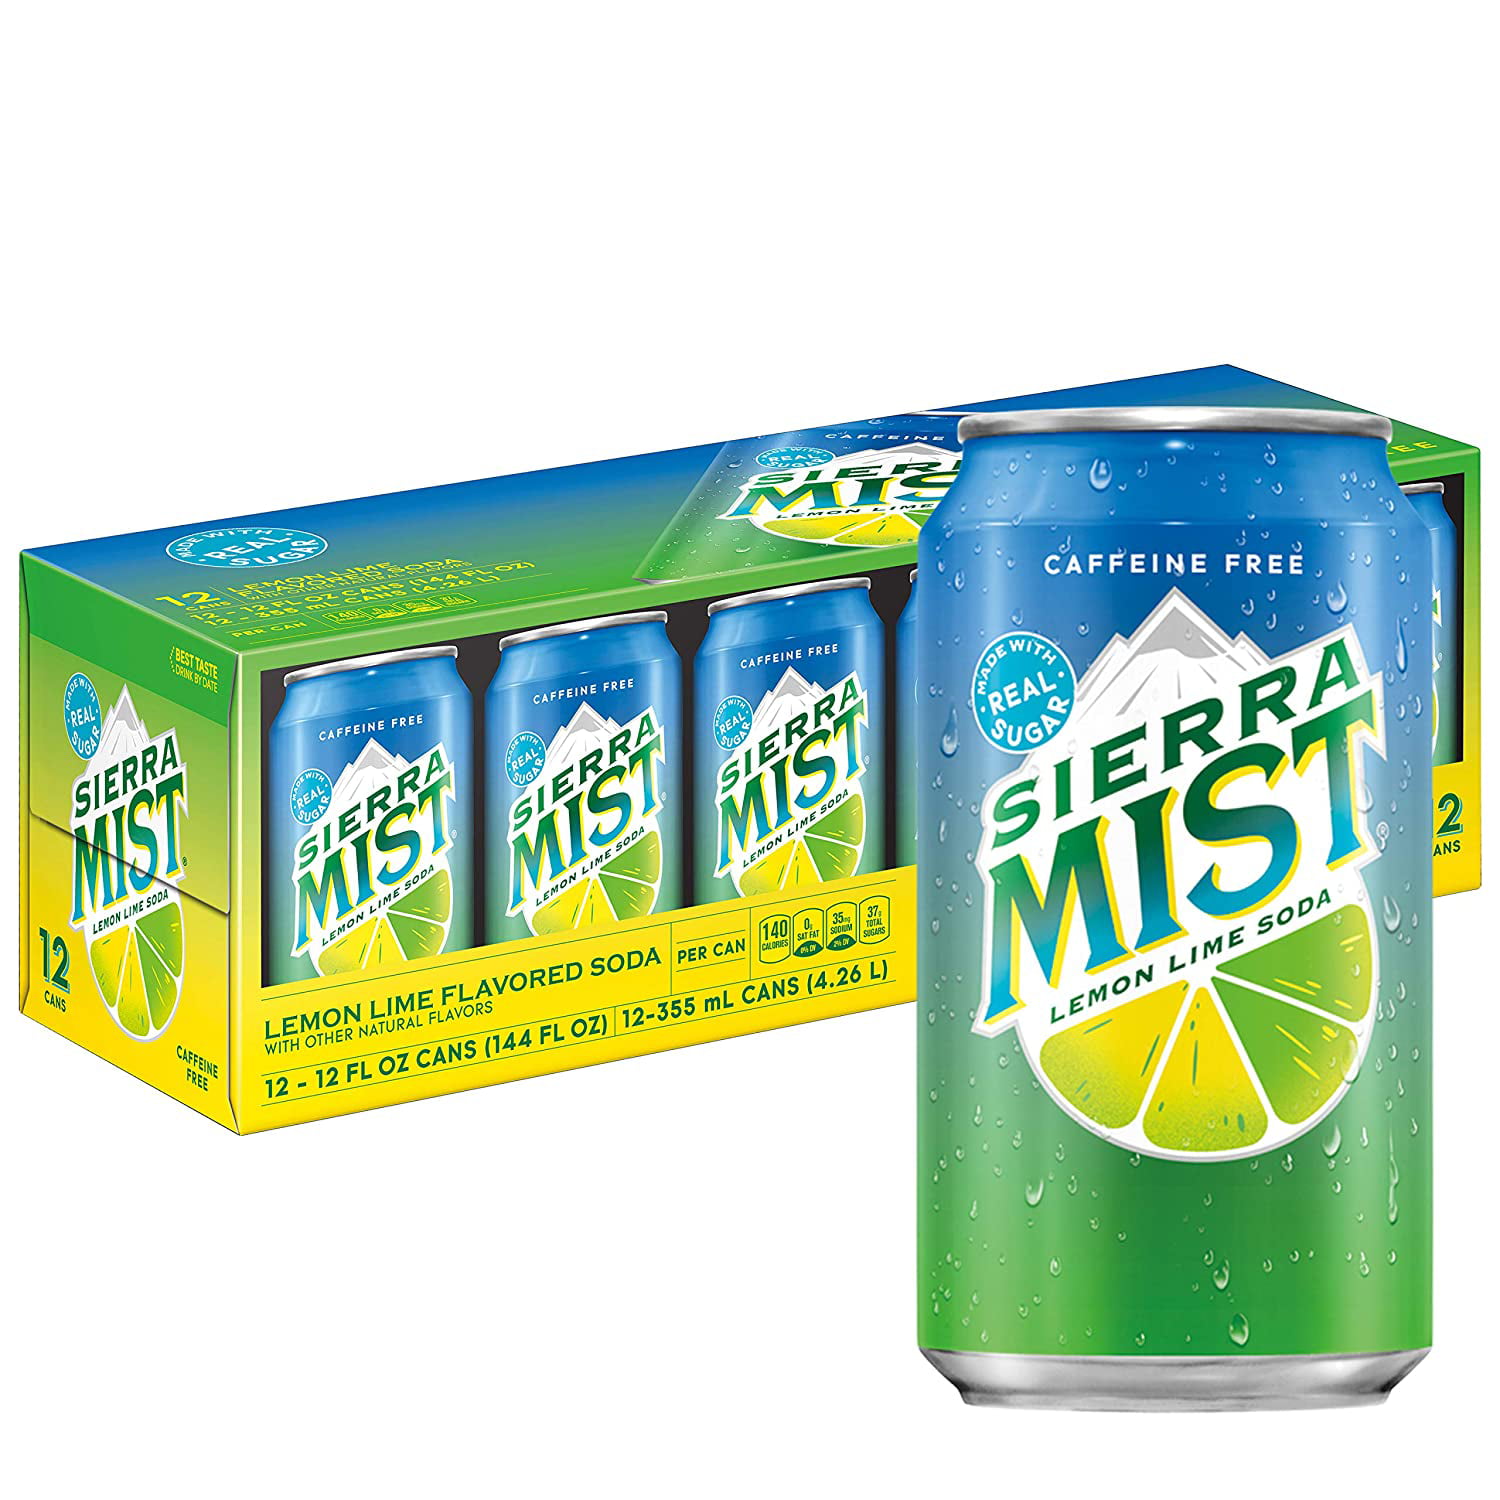 Sierra Mist Lemon-Lime Soda 12oz Cans (Pack of 20) - Walmart.com